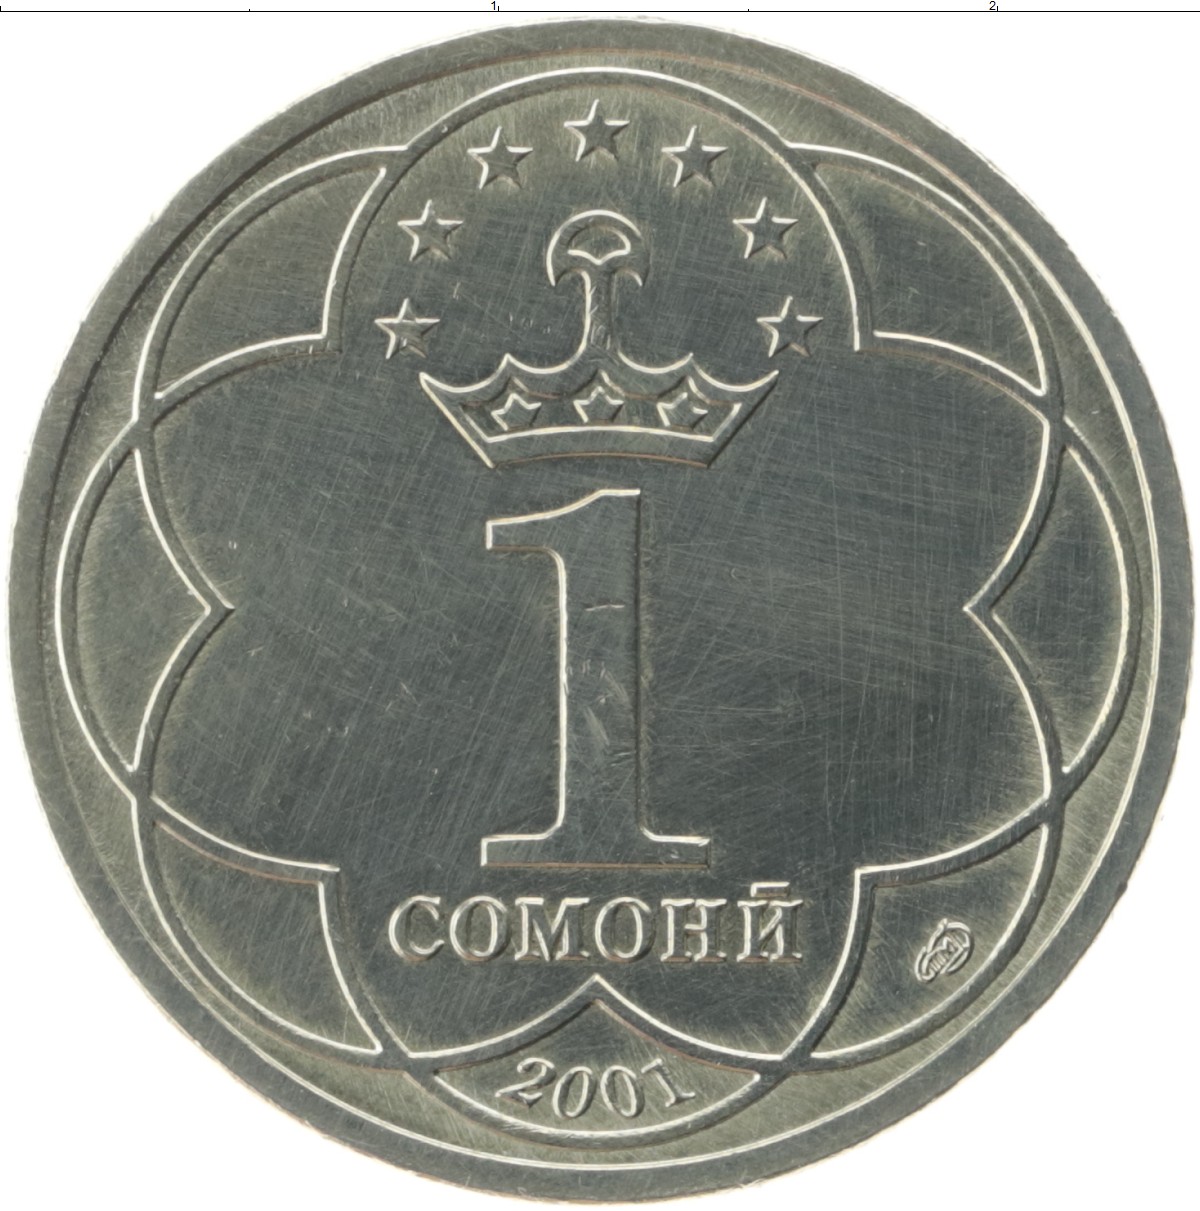 1 таджикский сомони. Монета Таджикистана 1. Монета 1 Сомони 2001 год Таджикистан. Таджикские монеты. Монетка Таджикистан.